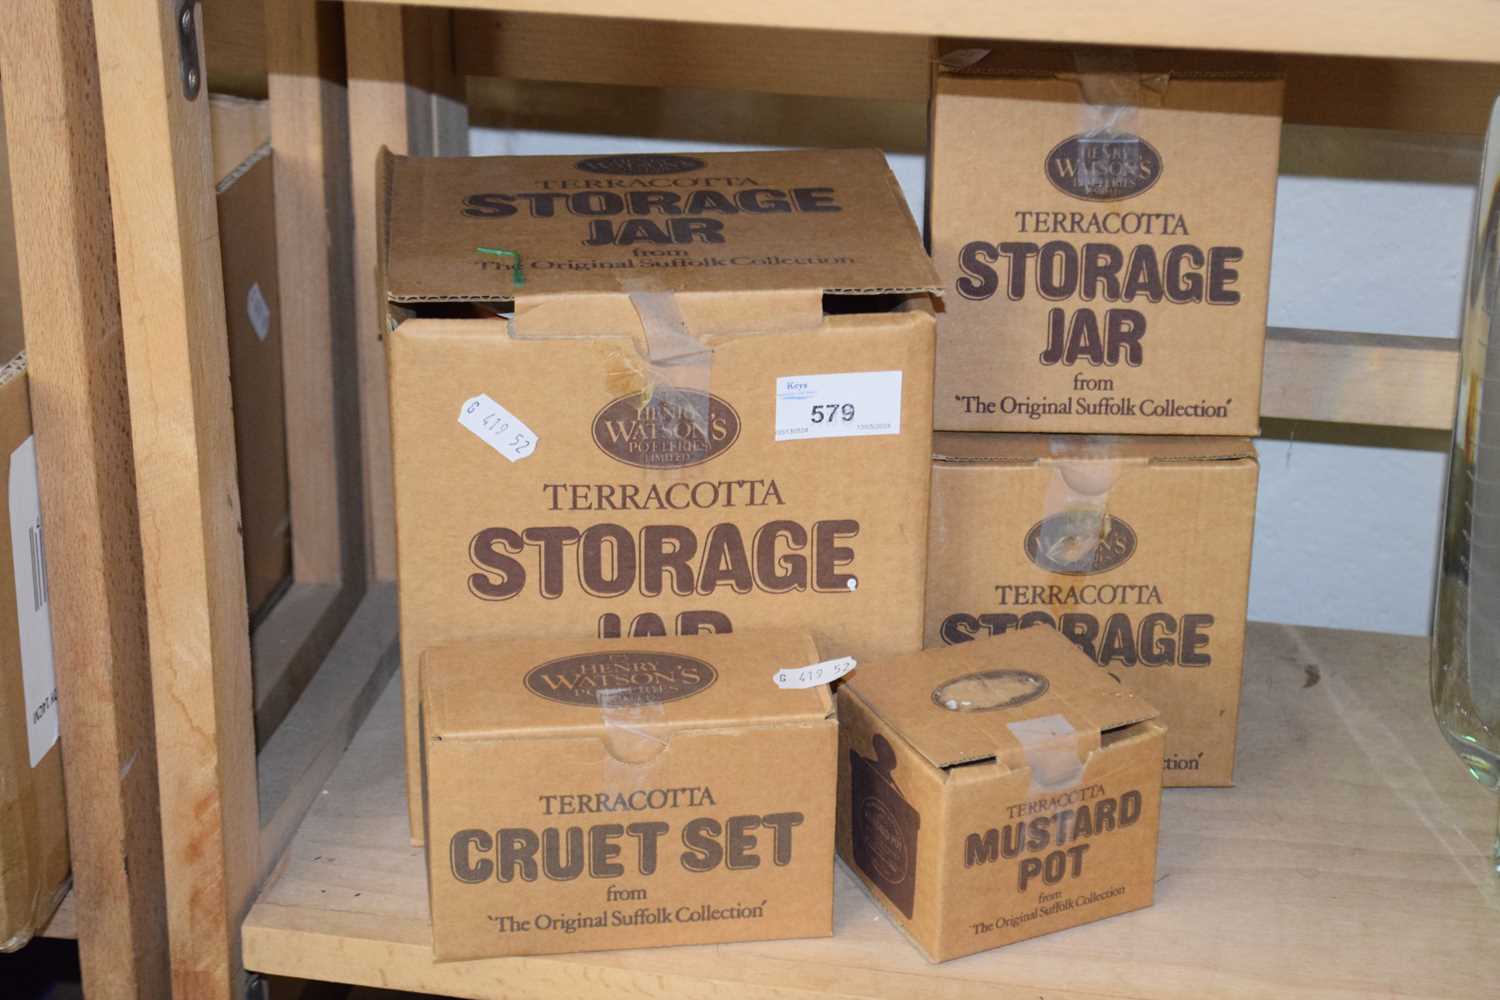 Terracotta storage jars and cruet set